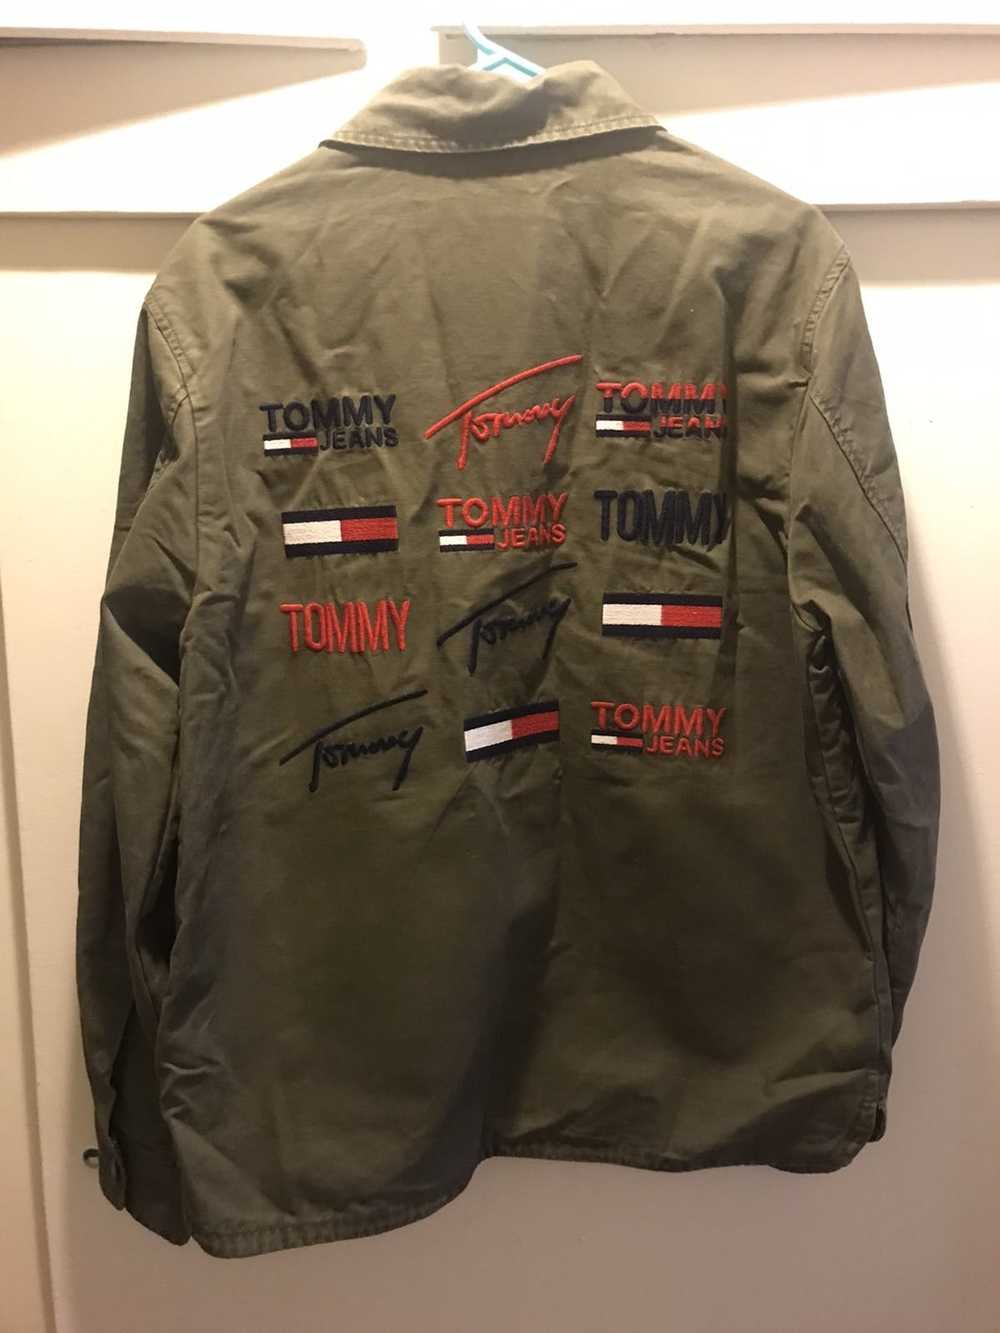 Tommy Hilfiger × Tommy Jeans Tommy jeans jacket - image 2